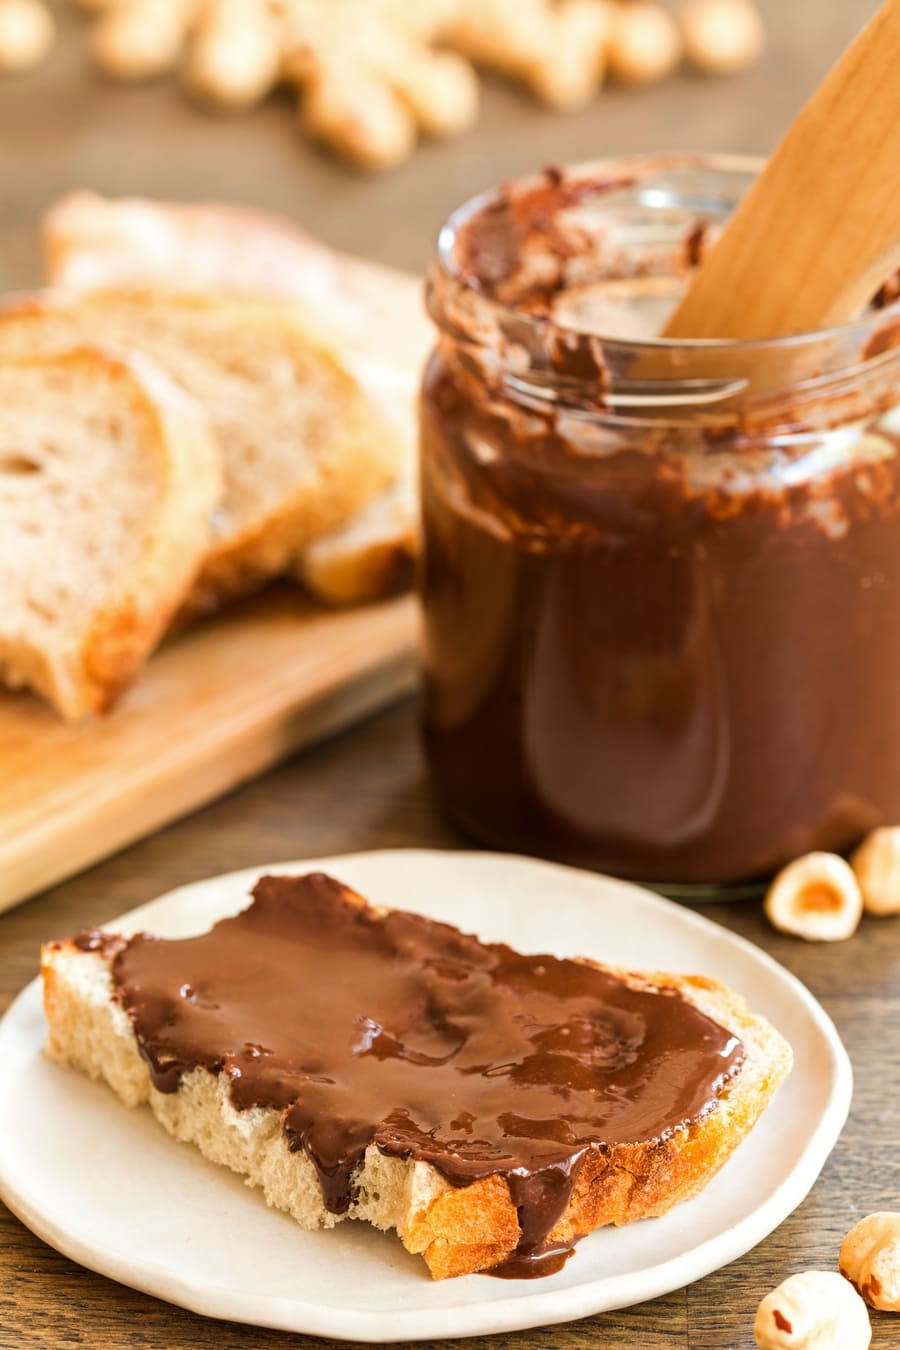 Homemade dark chocolate nutella spread on sourdough bread, jar behind it.